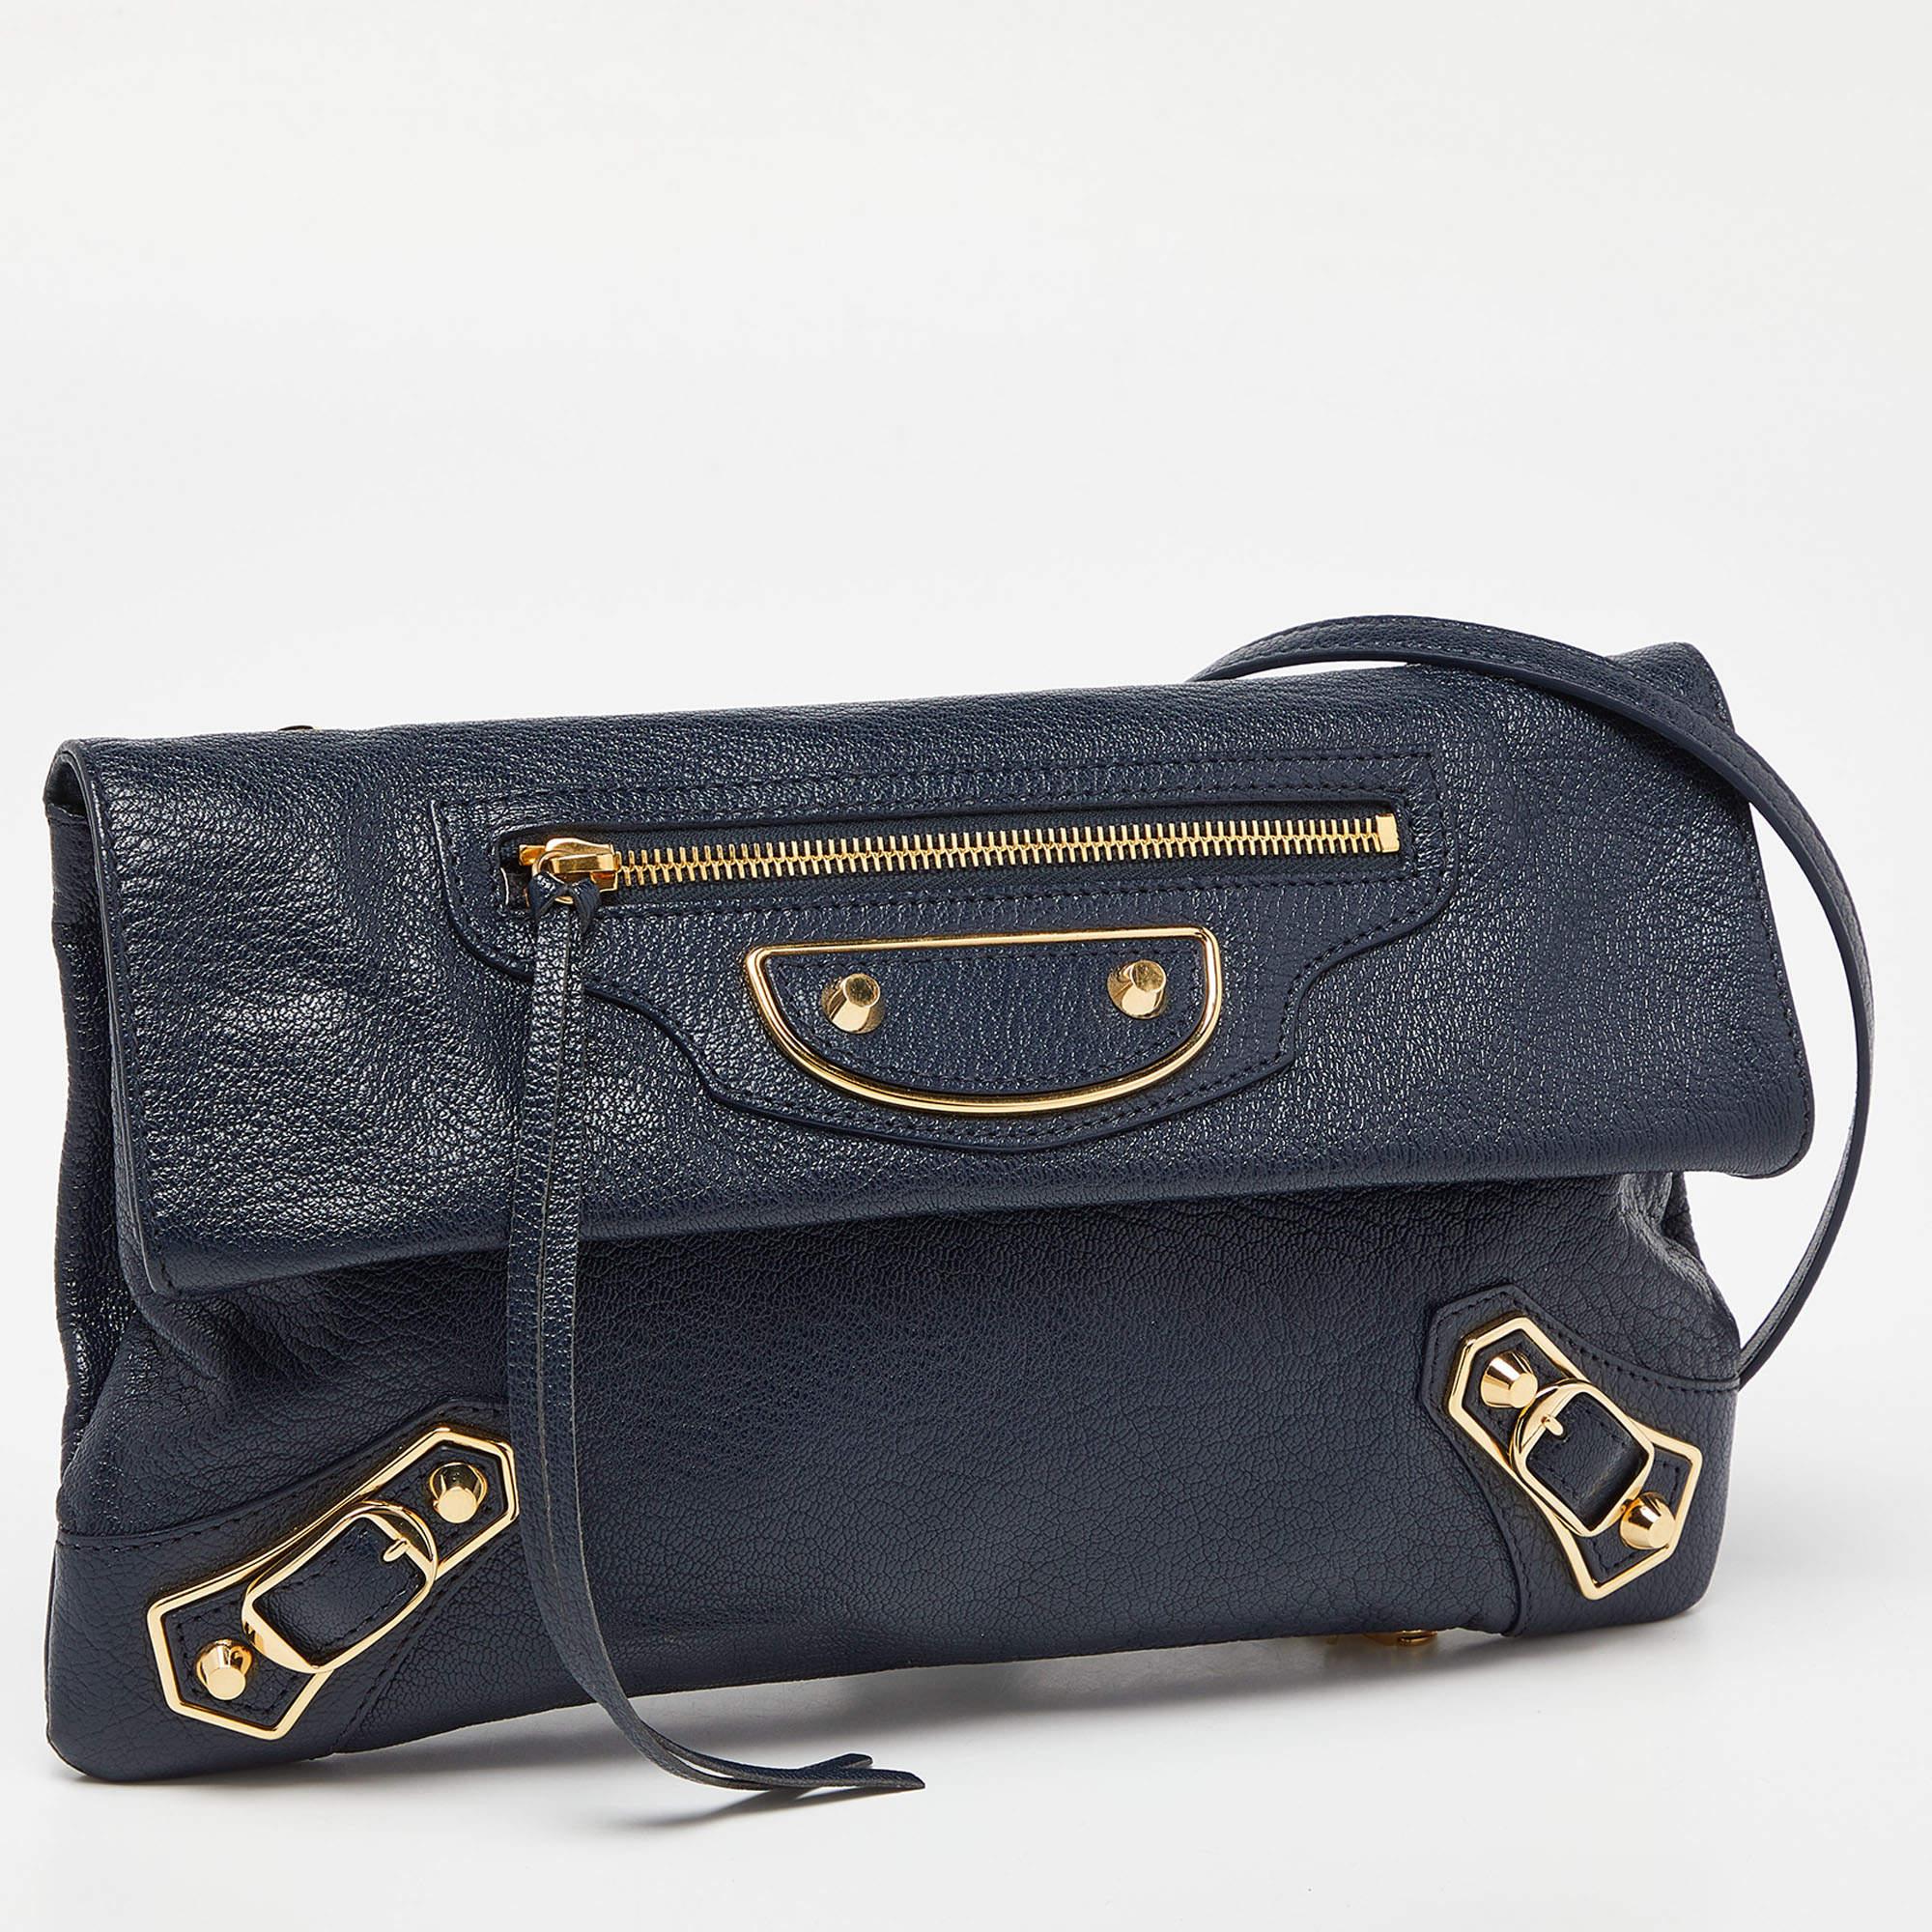 Women's Balenciaga Navy Blue Leather Metallic Edge Envelope Clutch Bag